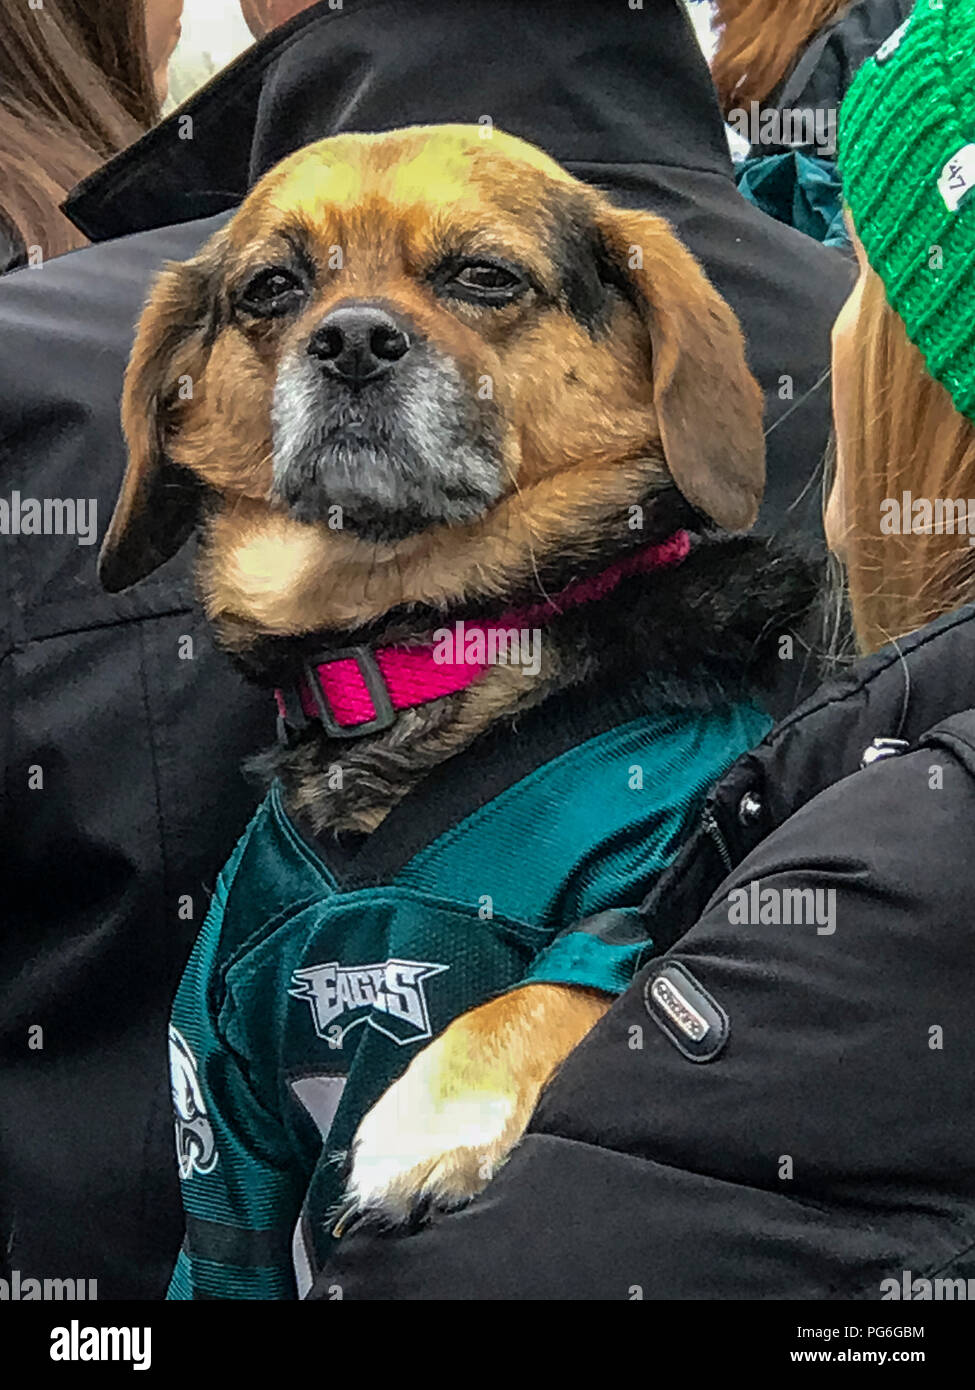 Canine Philadelphia Eagles fan sporting the team jersey. Stock Photo